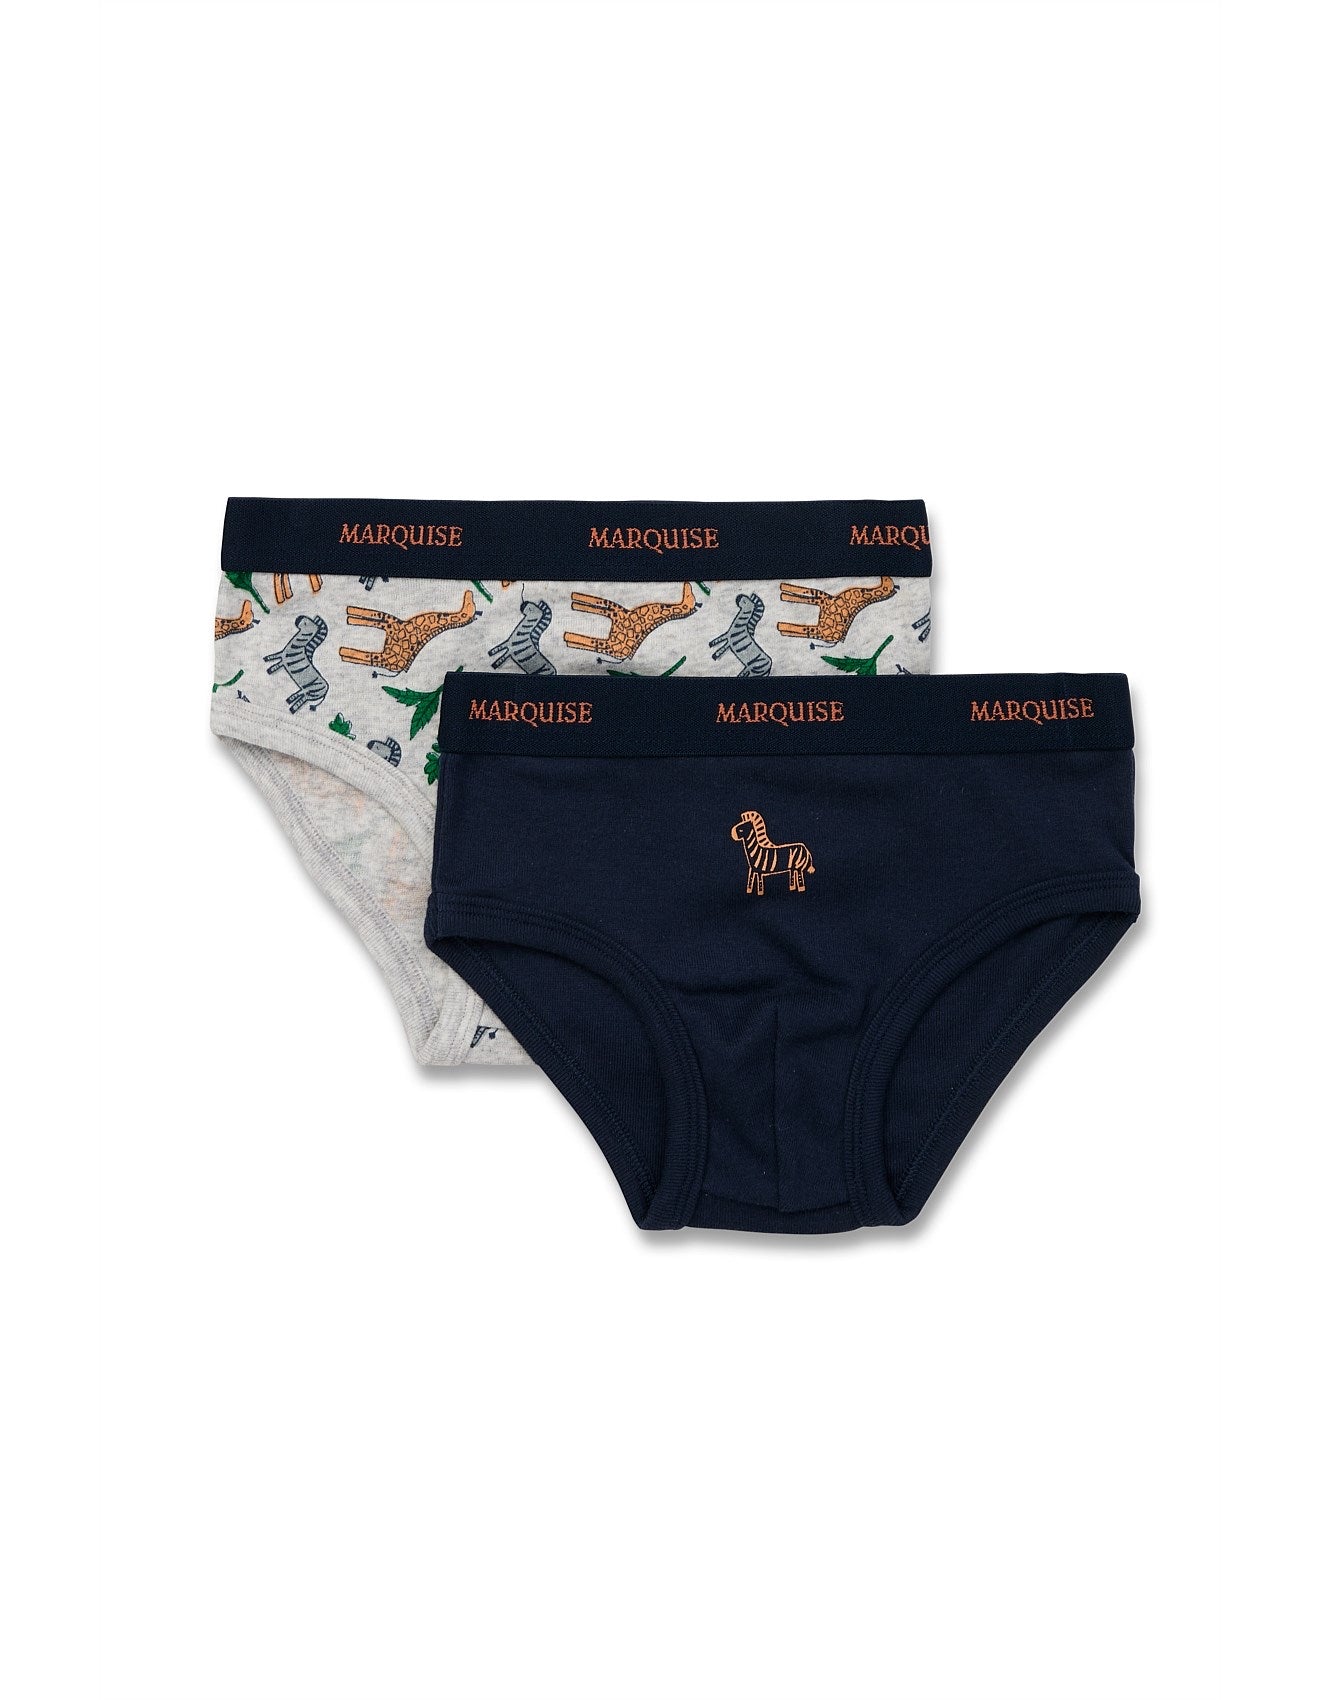 Marquise Boys Underwear 2 Pack - Twilight Safari